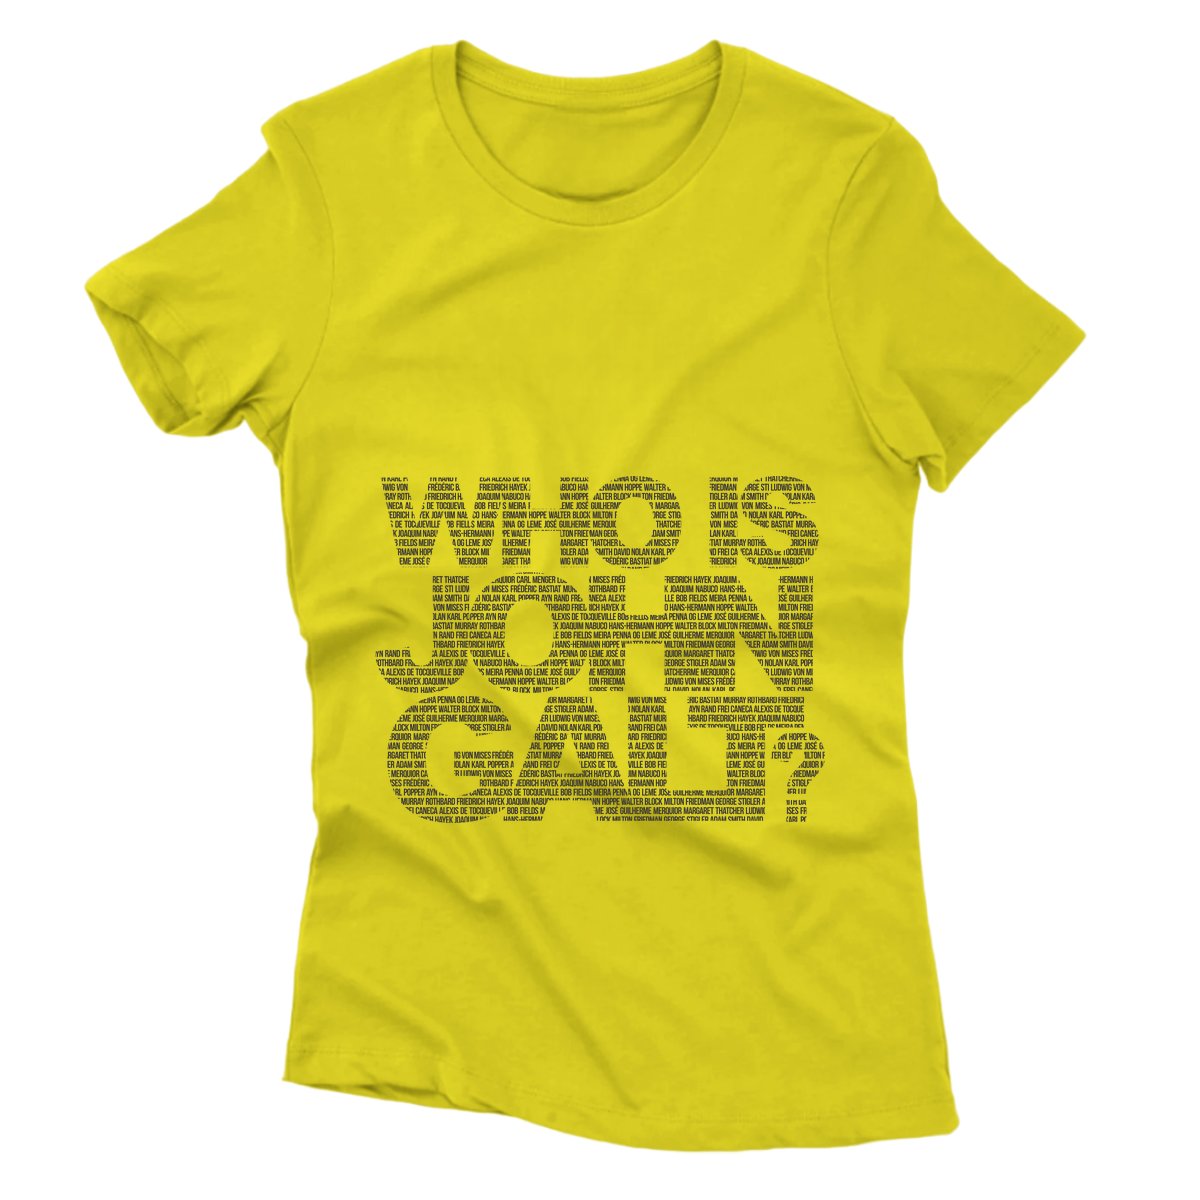 Camiseta - Who is John Galt